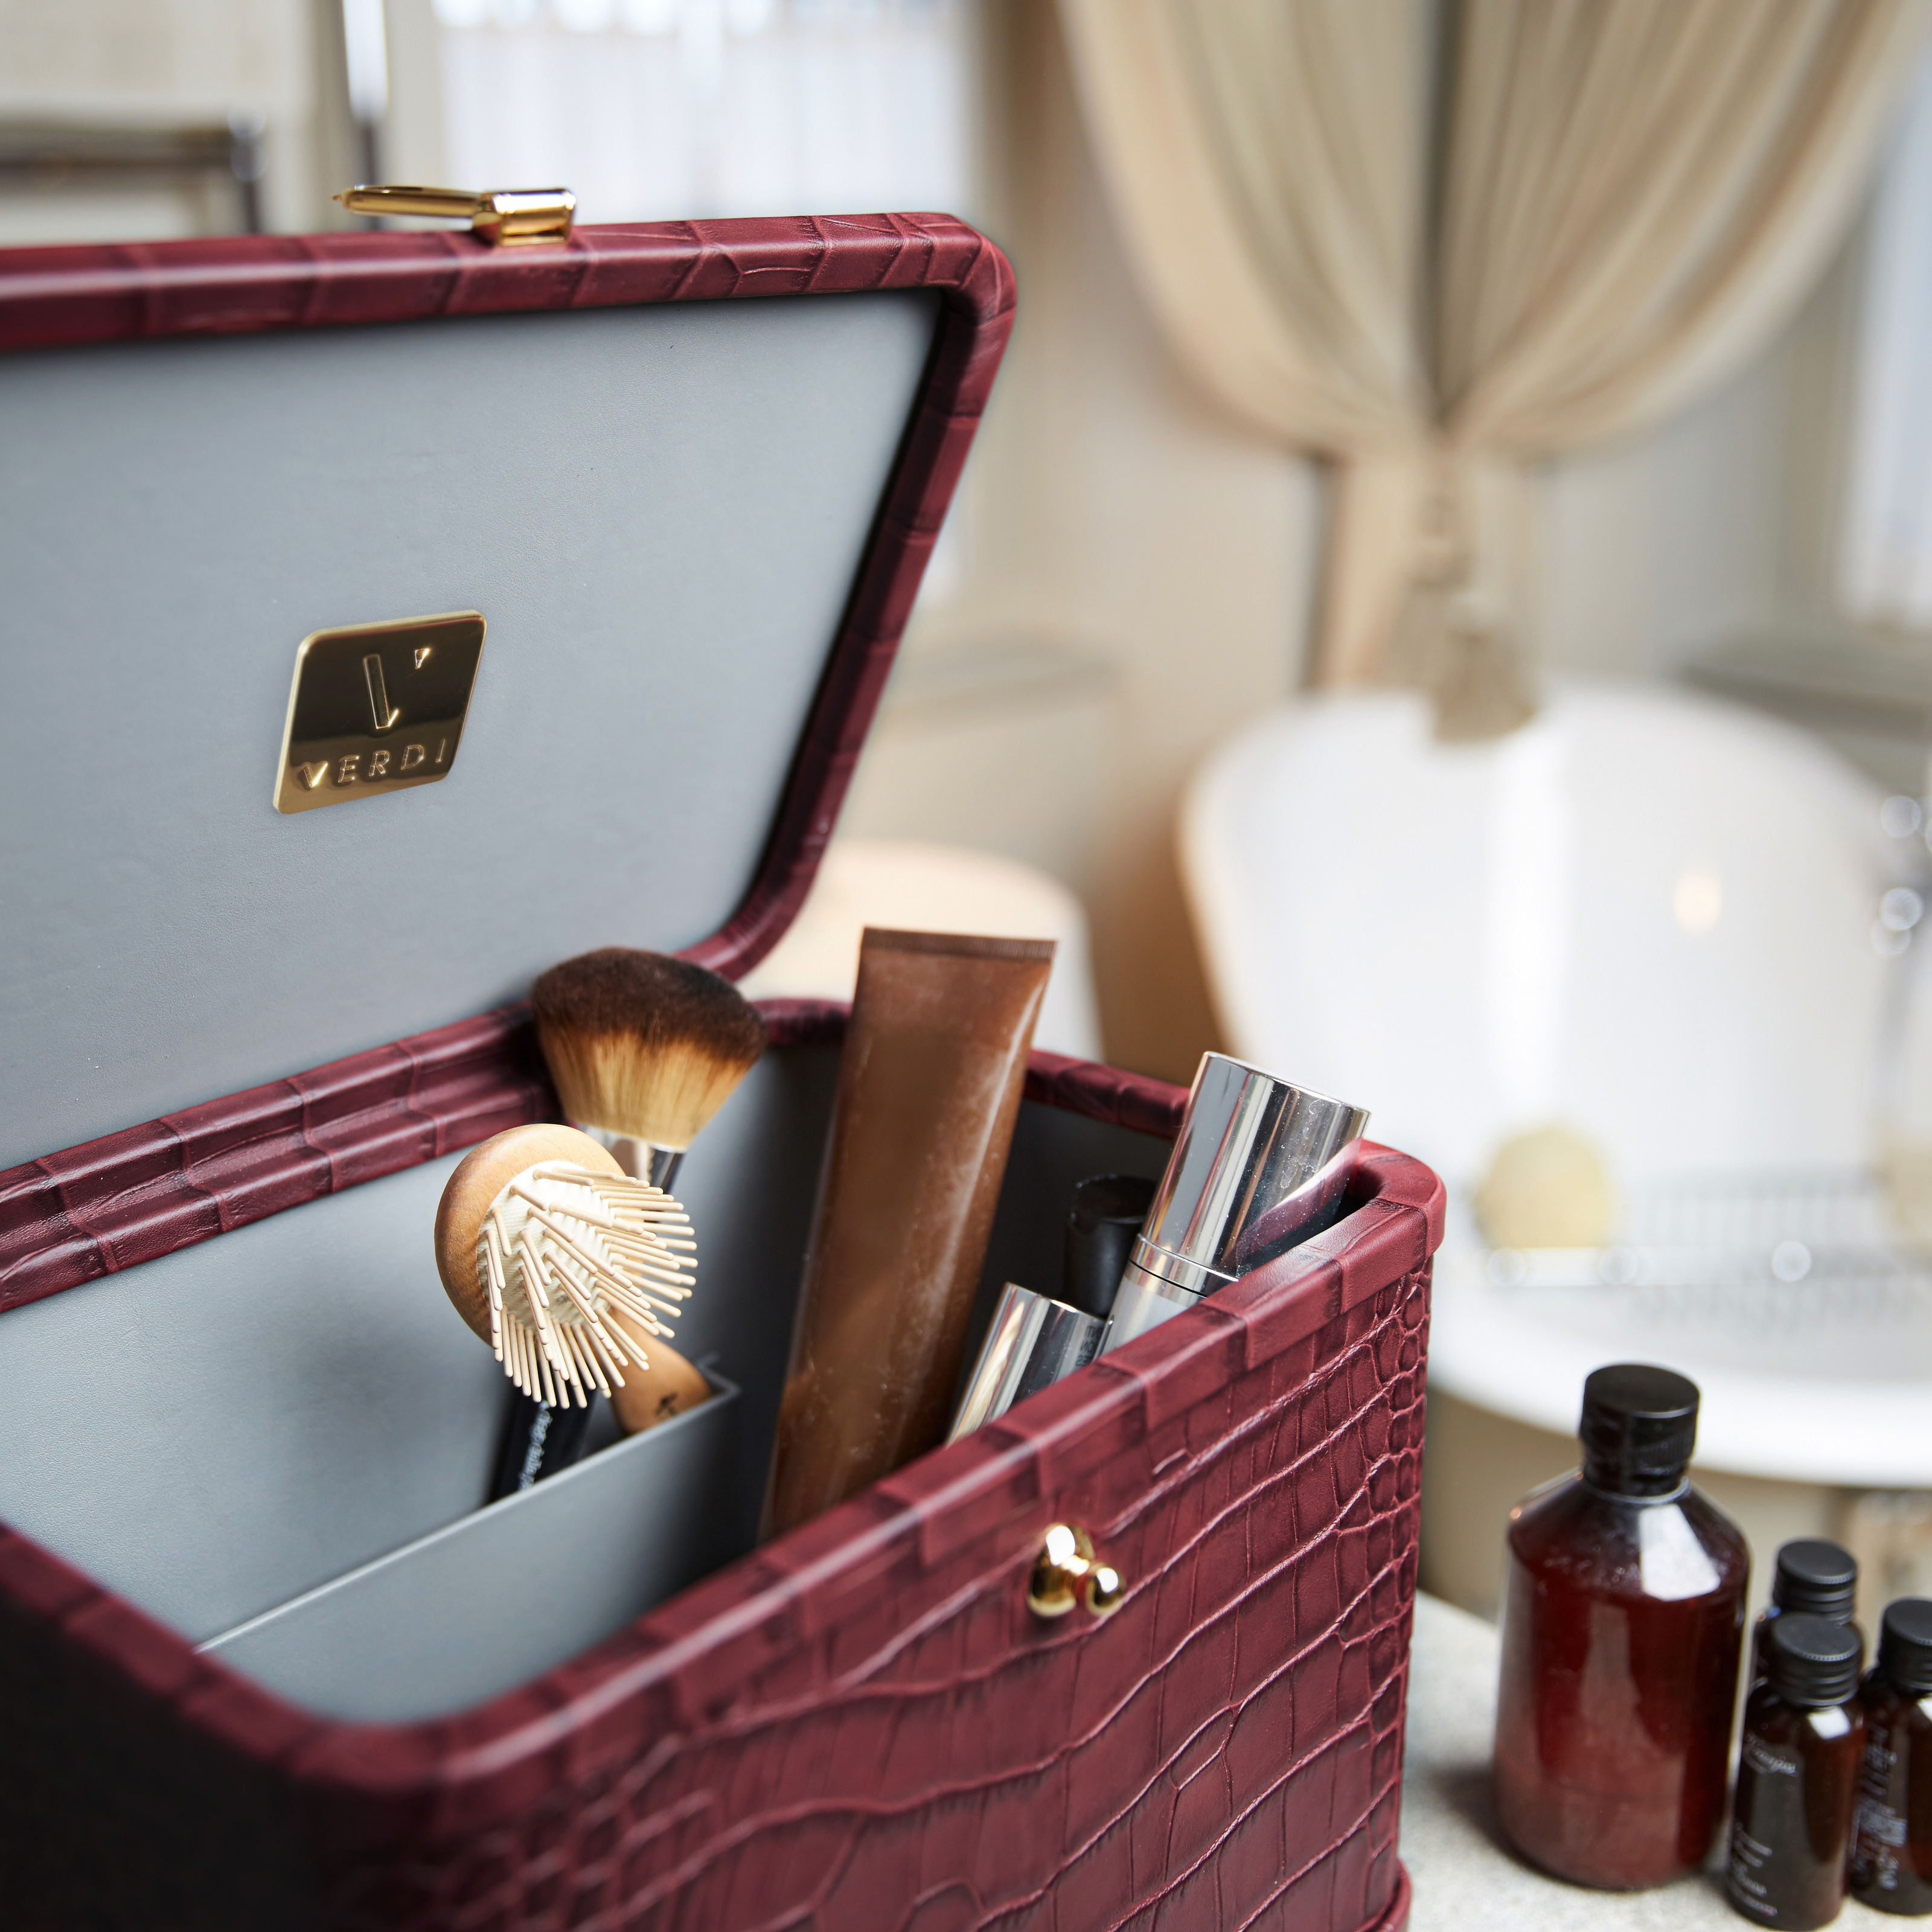 Verdi Livia large wine vanity case in crocodile print leather holding products in bathroom.